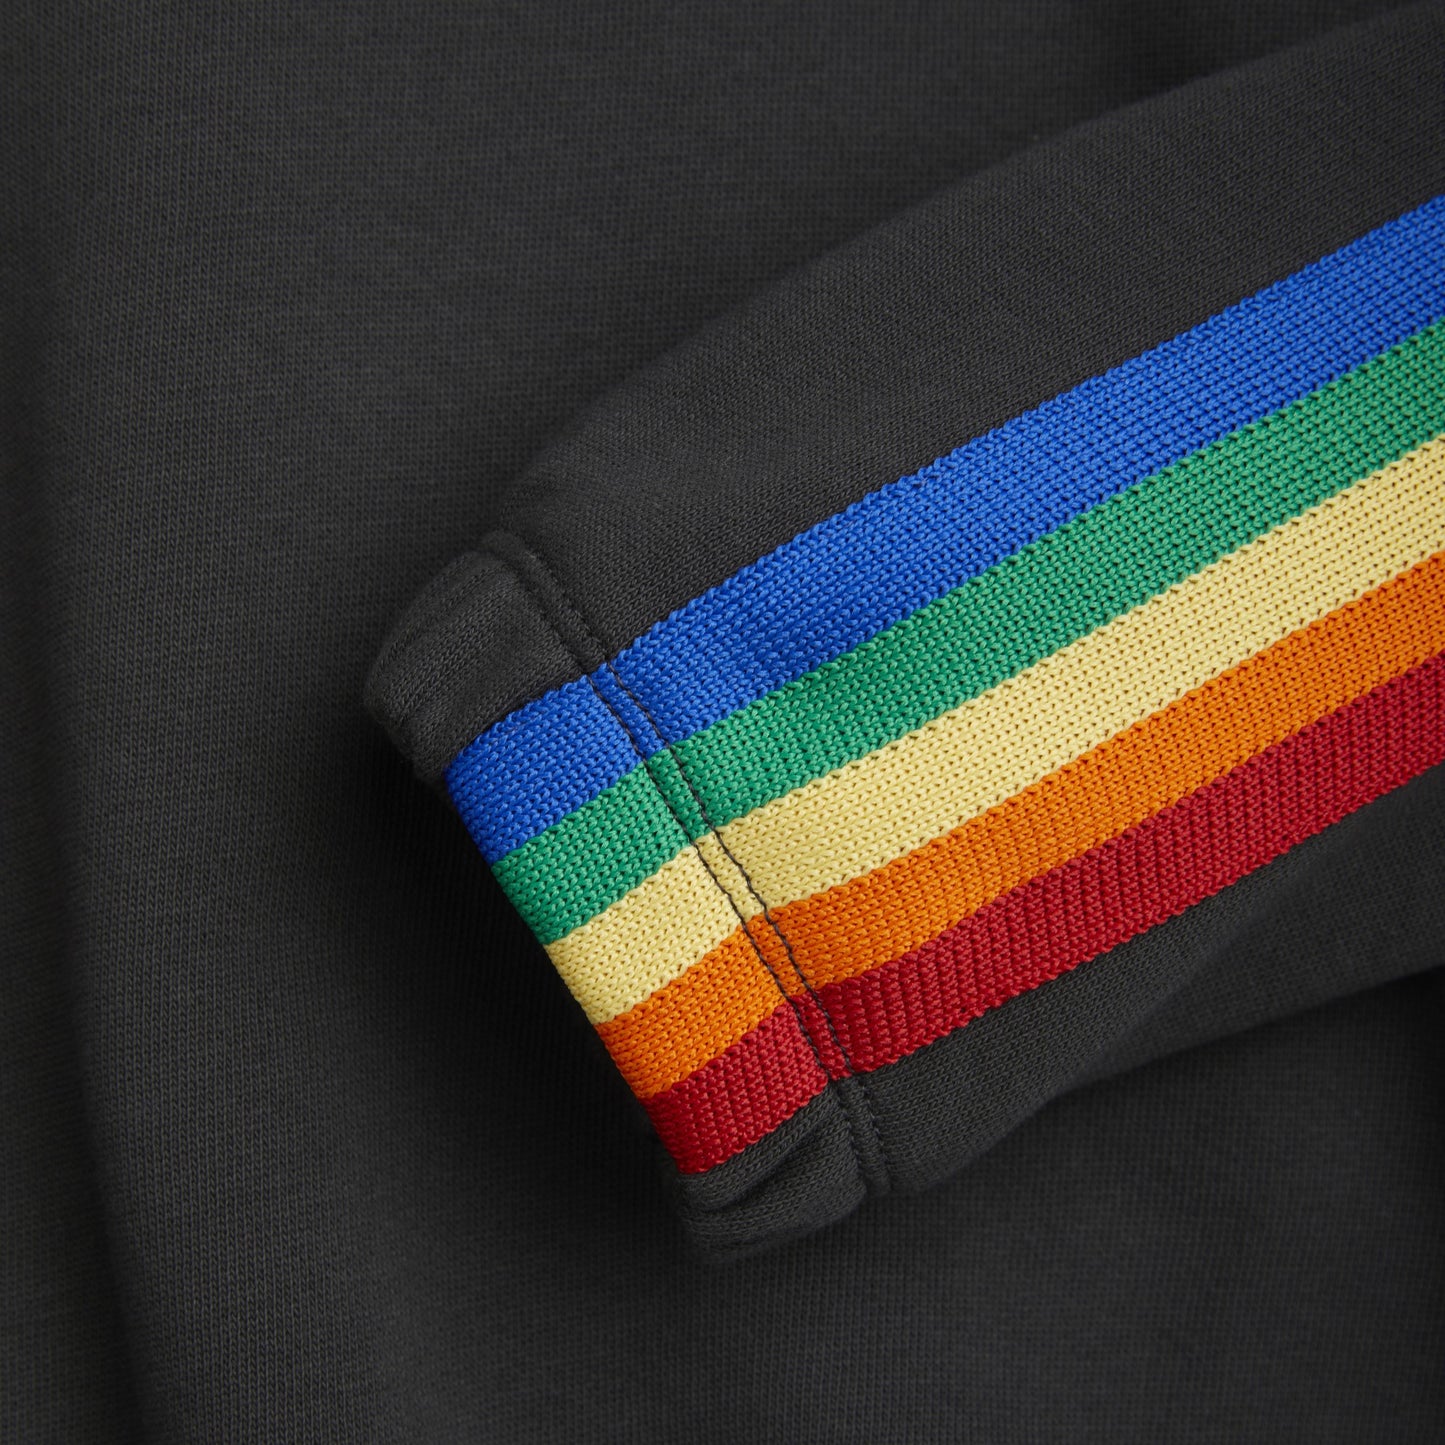 MINI RODINI Rainbow Stripe Sweatshirt ALWAYS SHOW